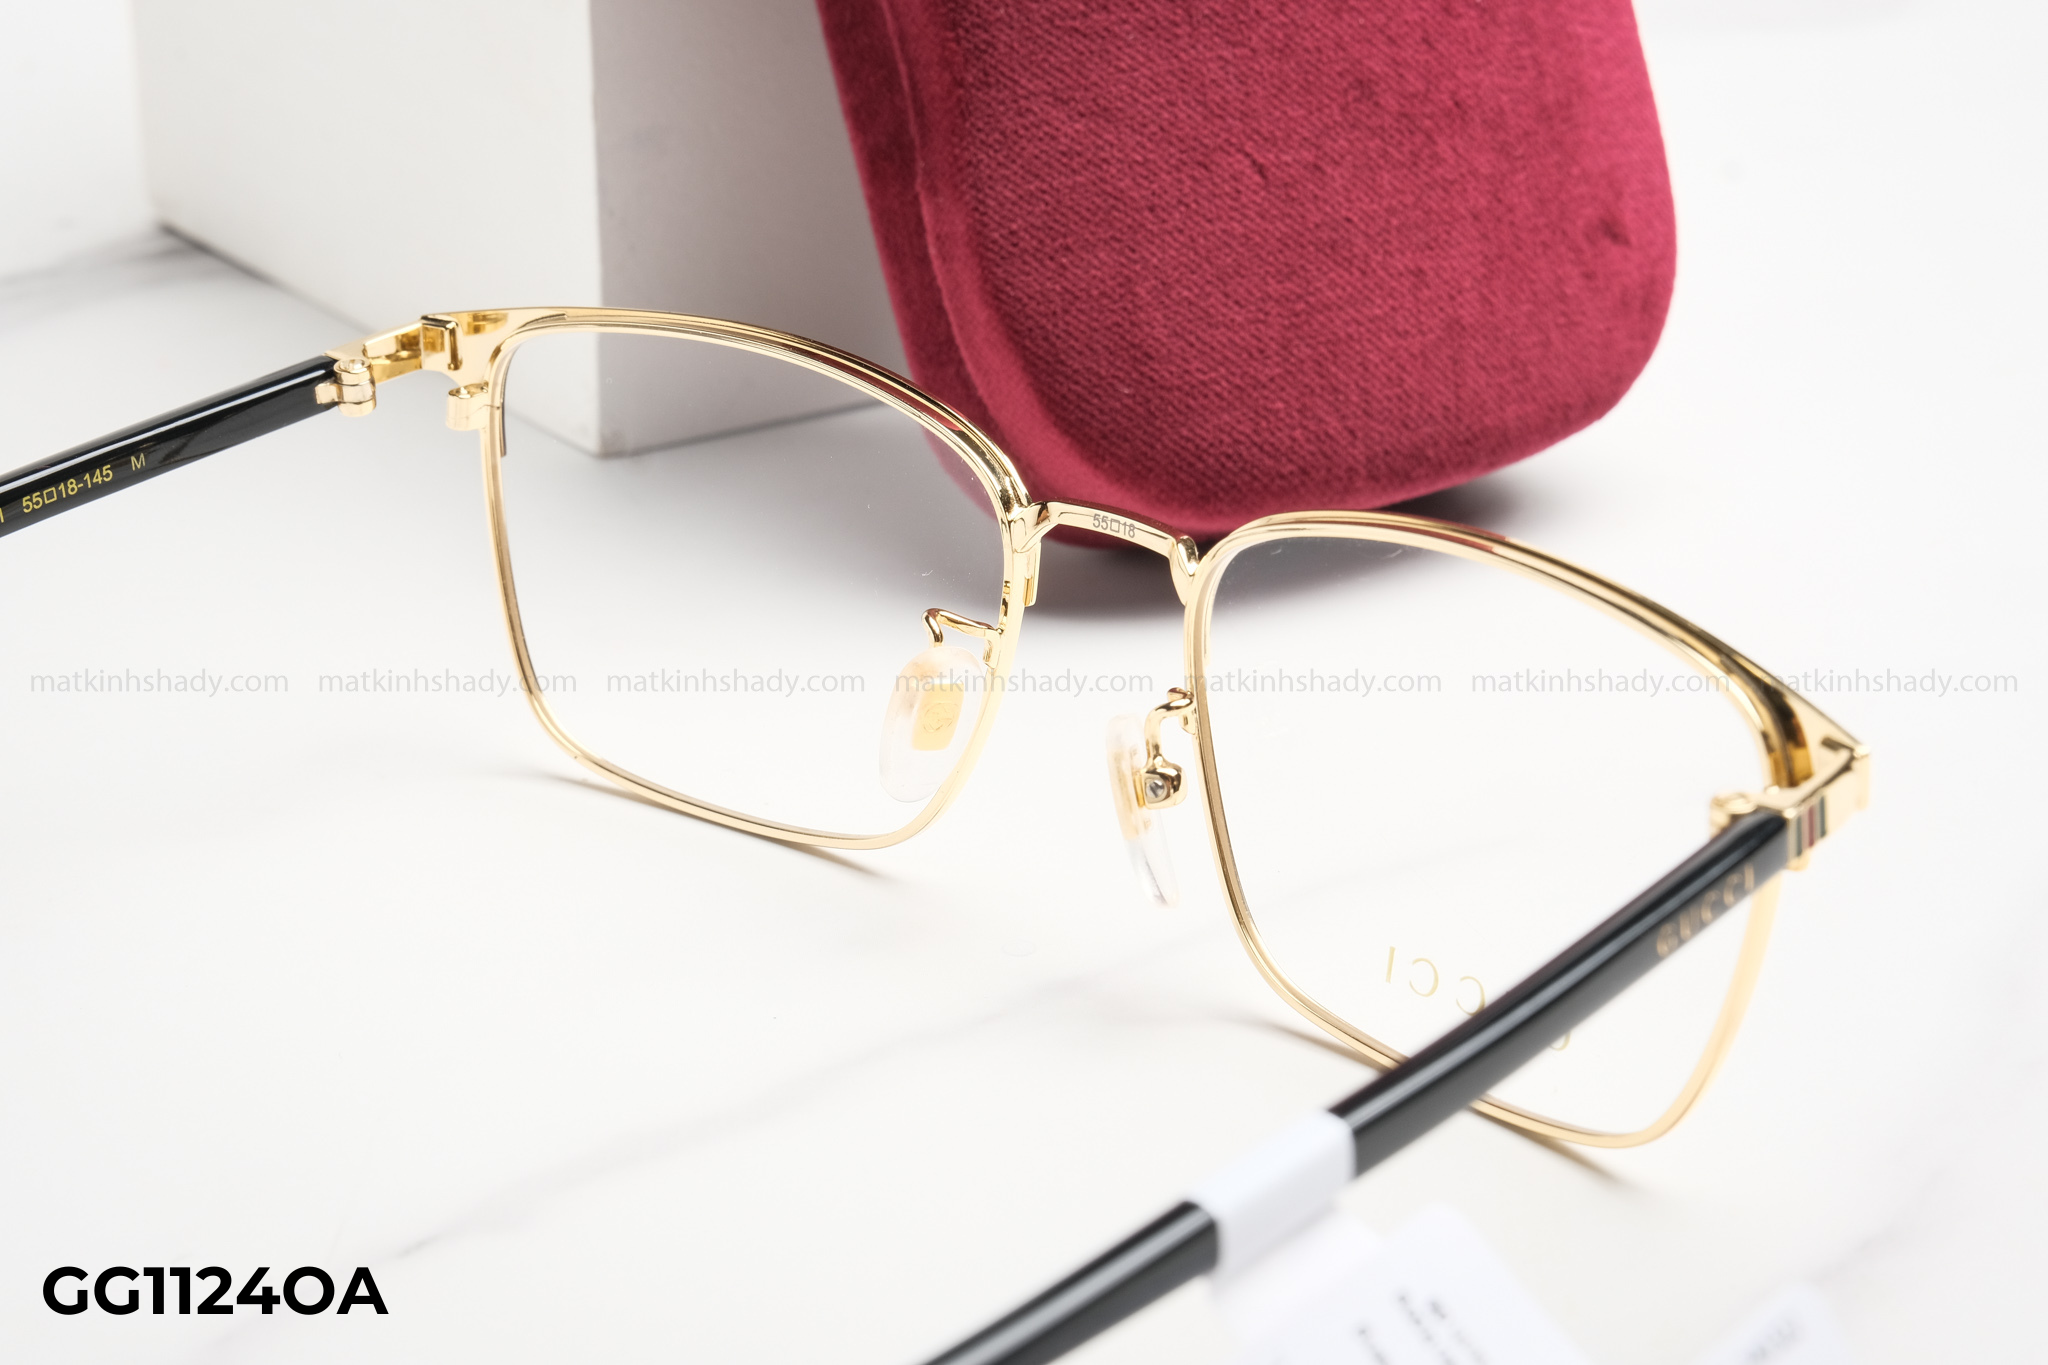  Gucci Eyewear - Glasses - GG1124OA 